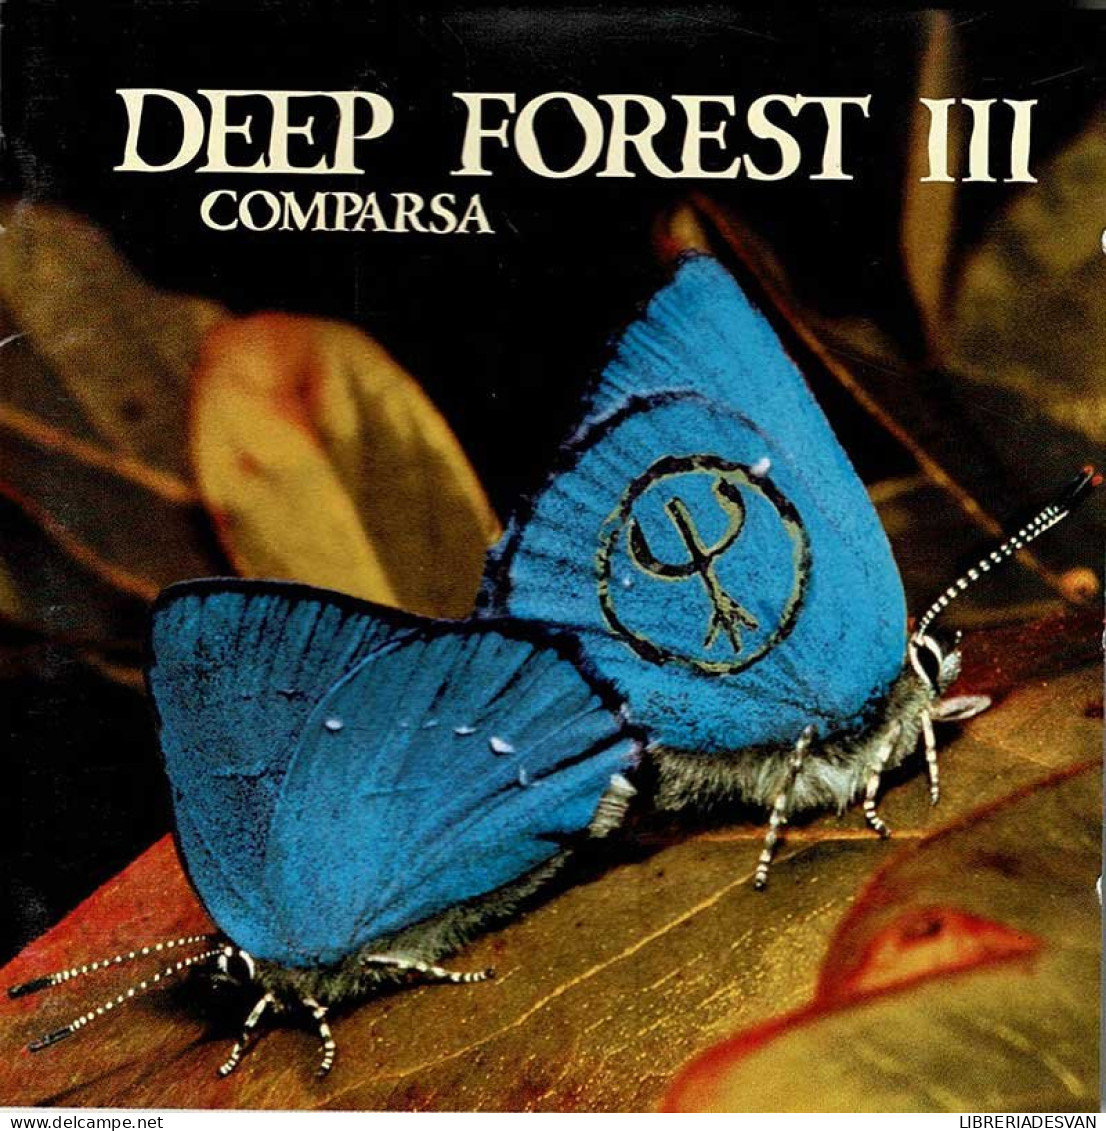 Deep Forest III - Comparsa. CD - Nueva Era (New Age)